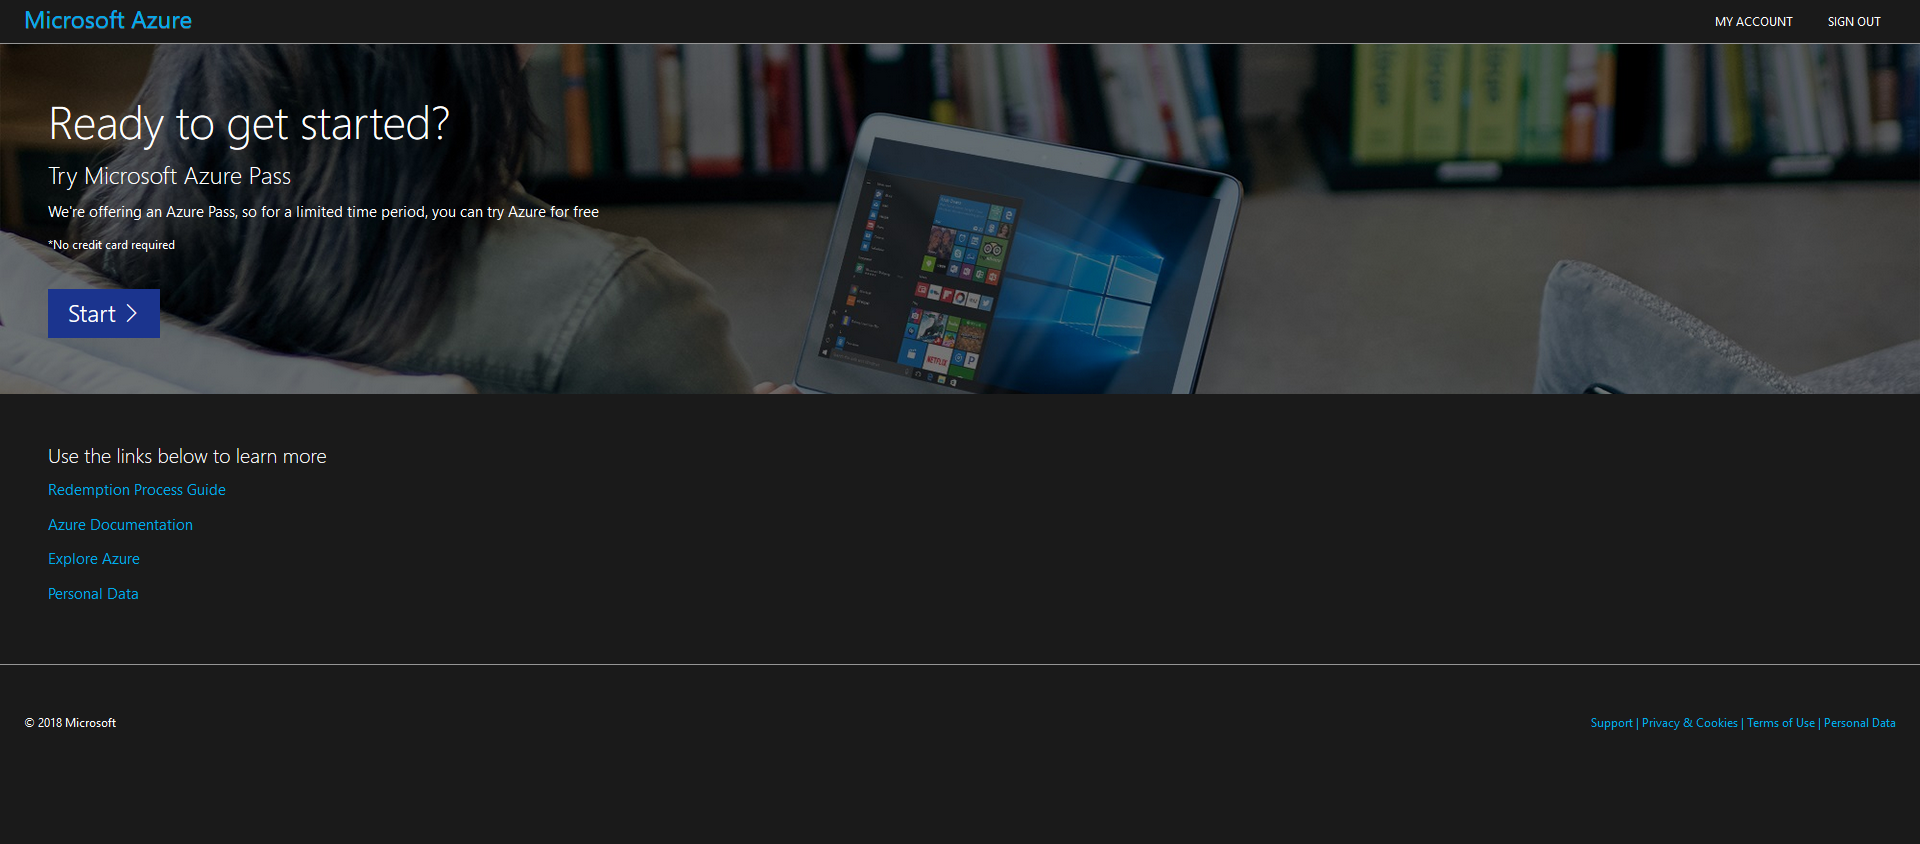 ekran startowy Microsoft Azure